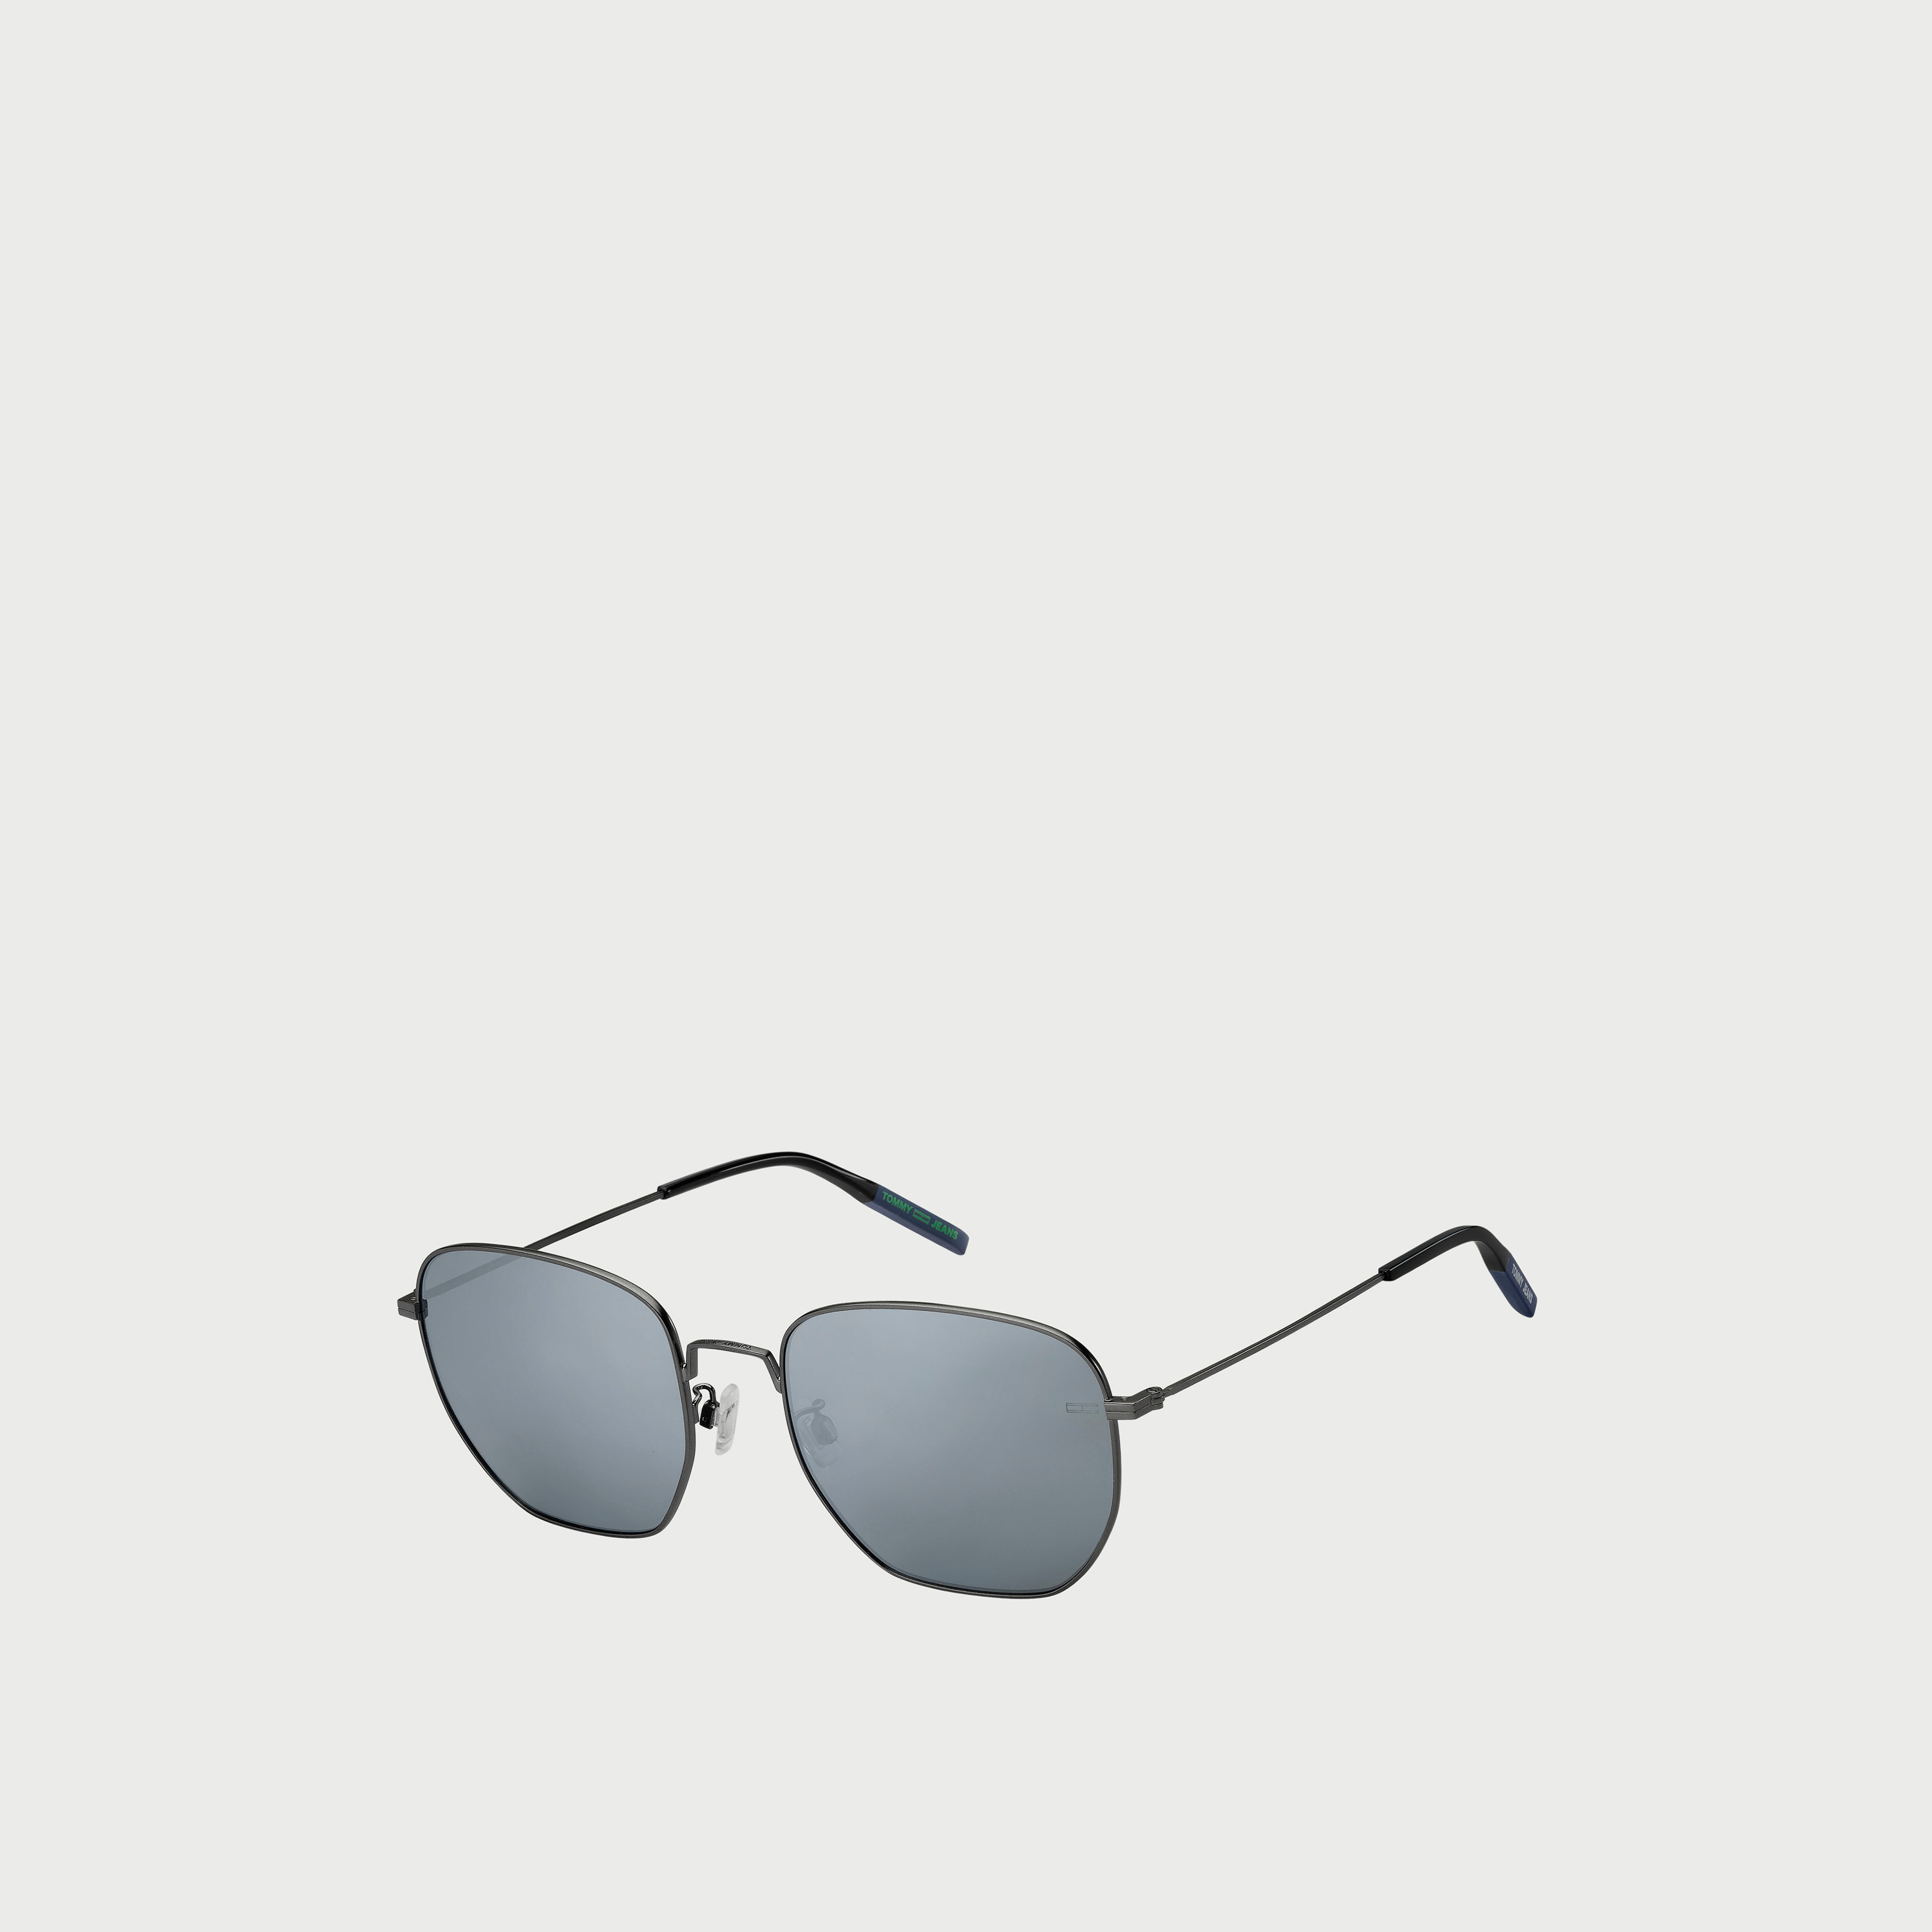 Authentic Tommy Hilfiger Saint Rectangular Sunglasses Blue Gray Frame for  sale online | eBay